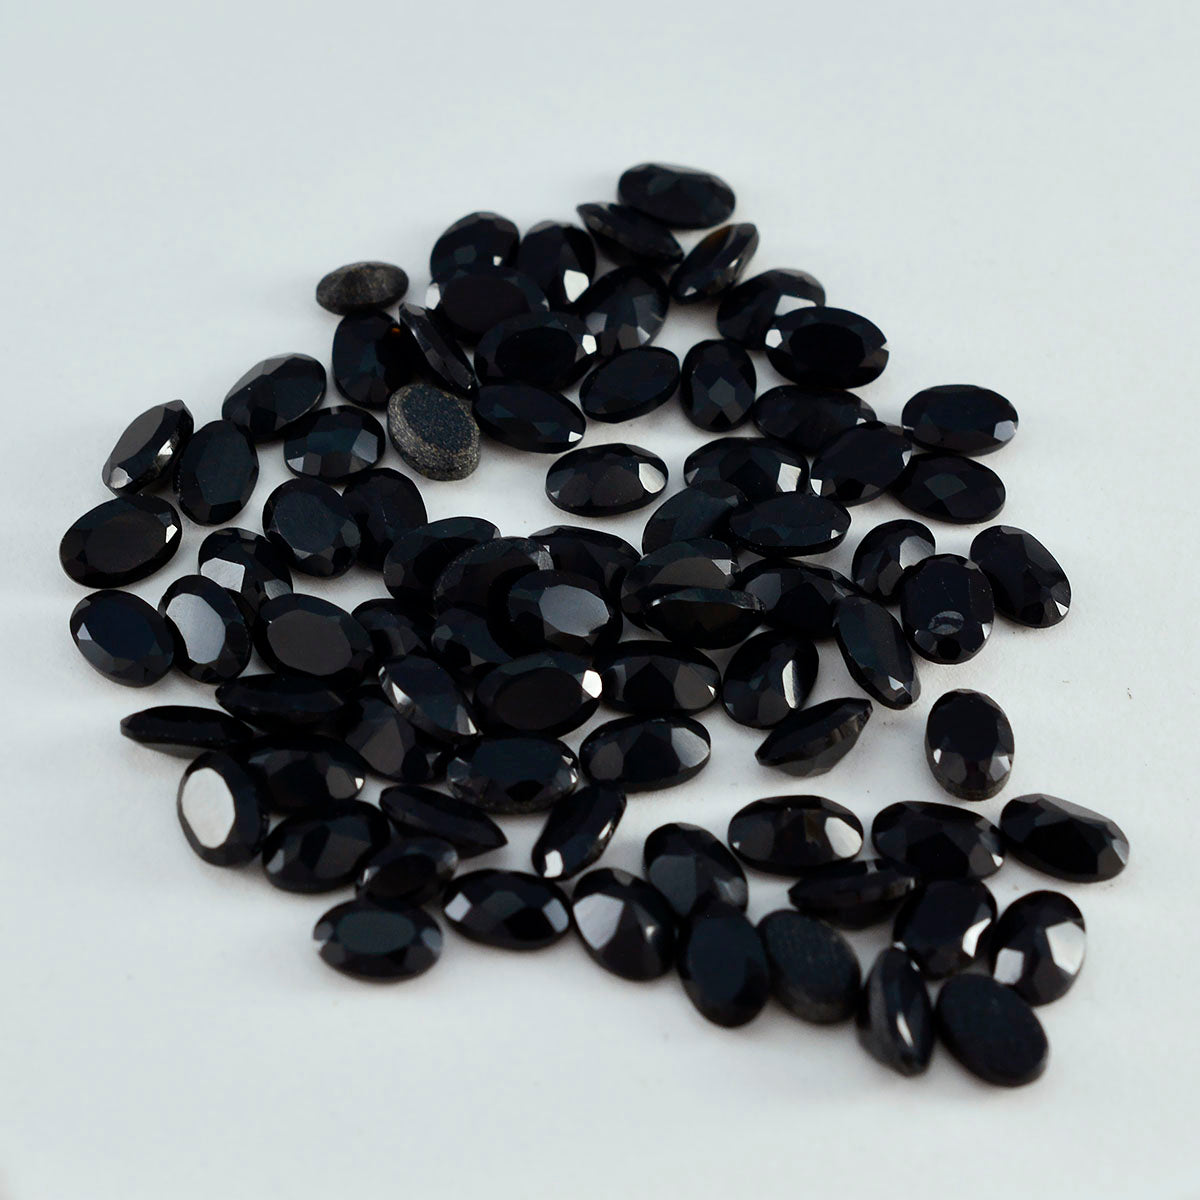 Riyogems 1PC Real Black Onyx Faceted 3x5 mm Oval Shape lovely Quality Gemstone